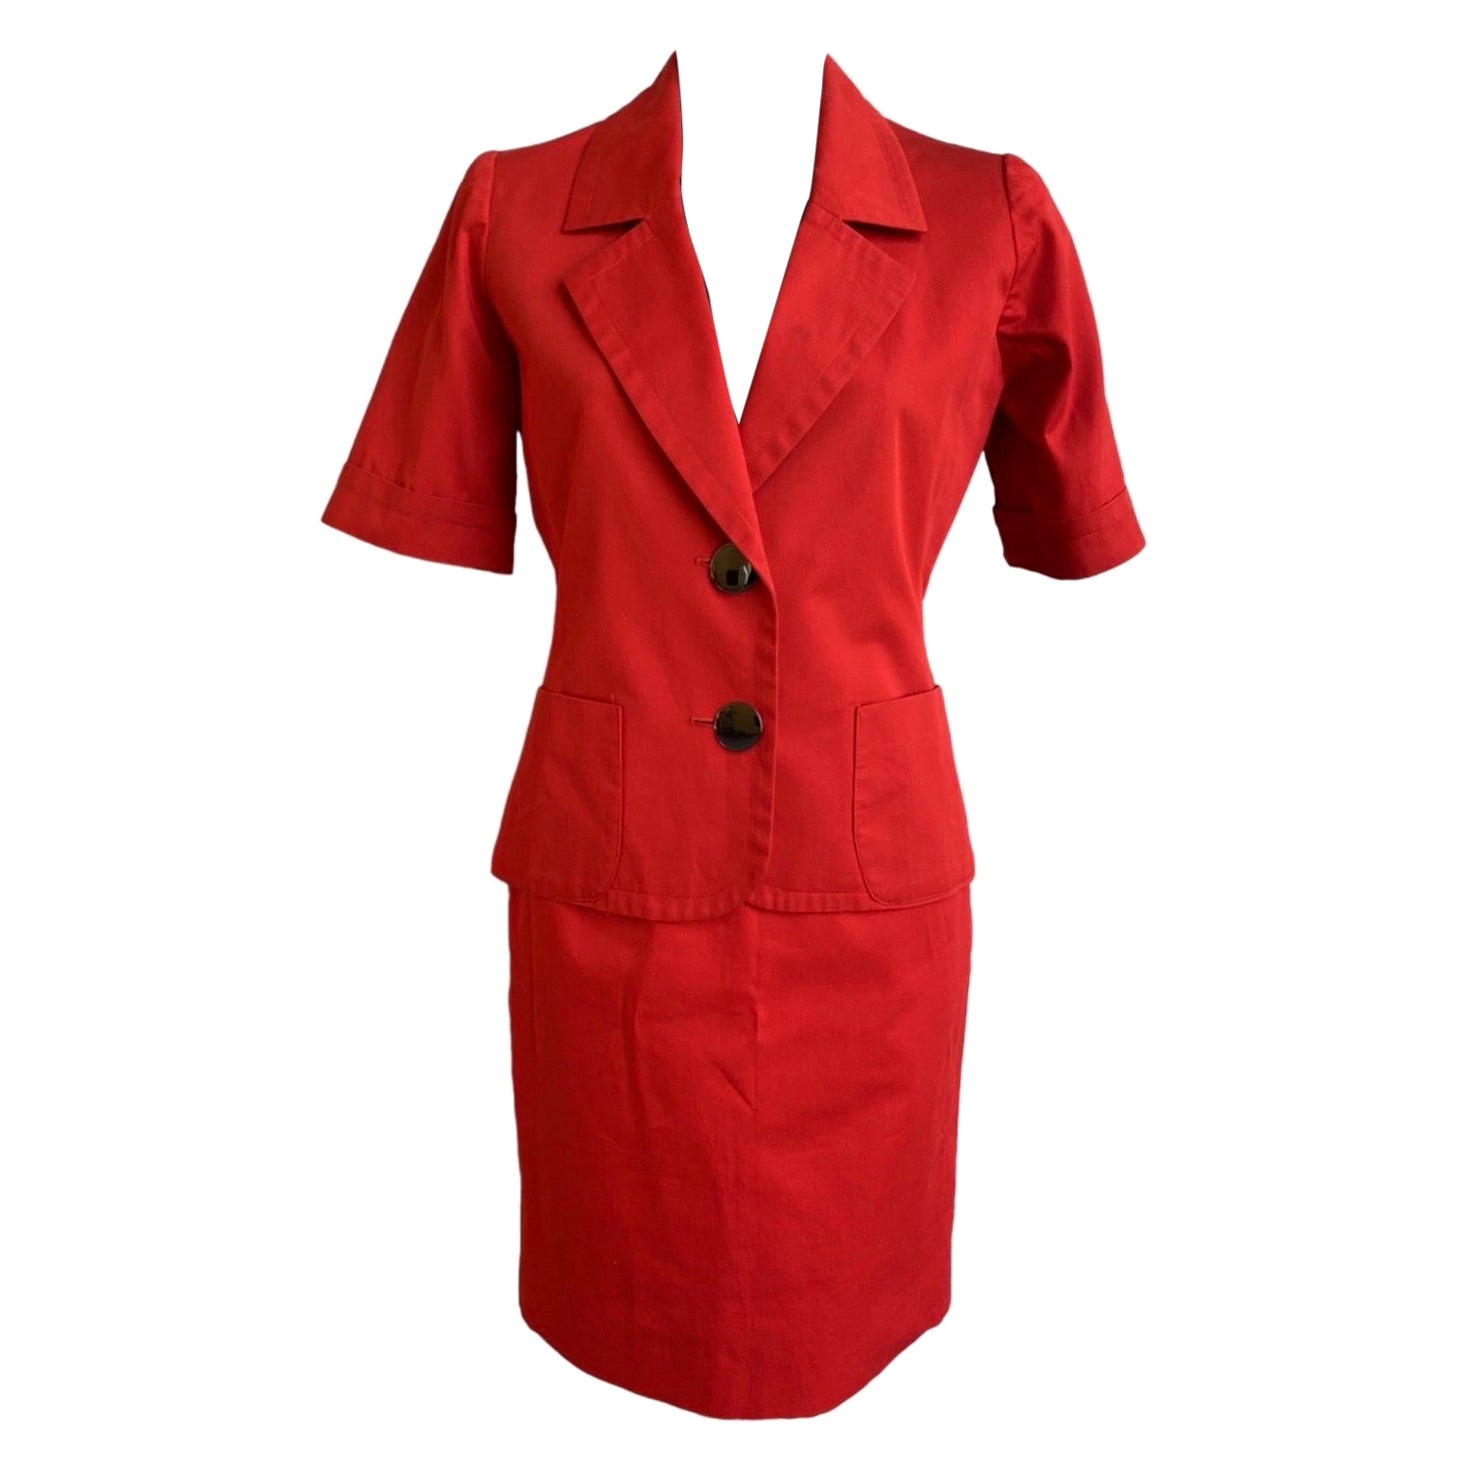 Yves Saint Laurent - Costume rouge vintage